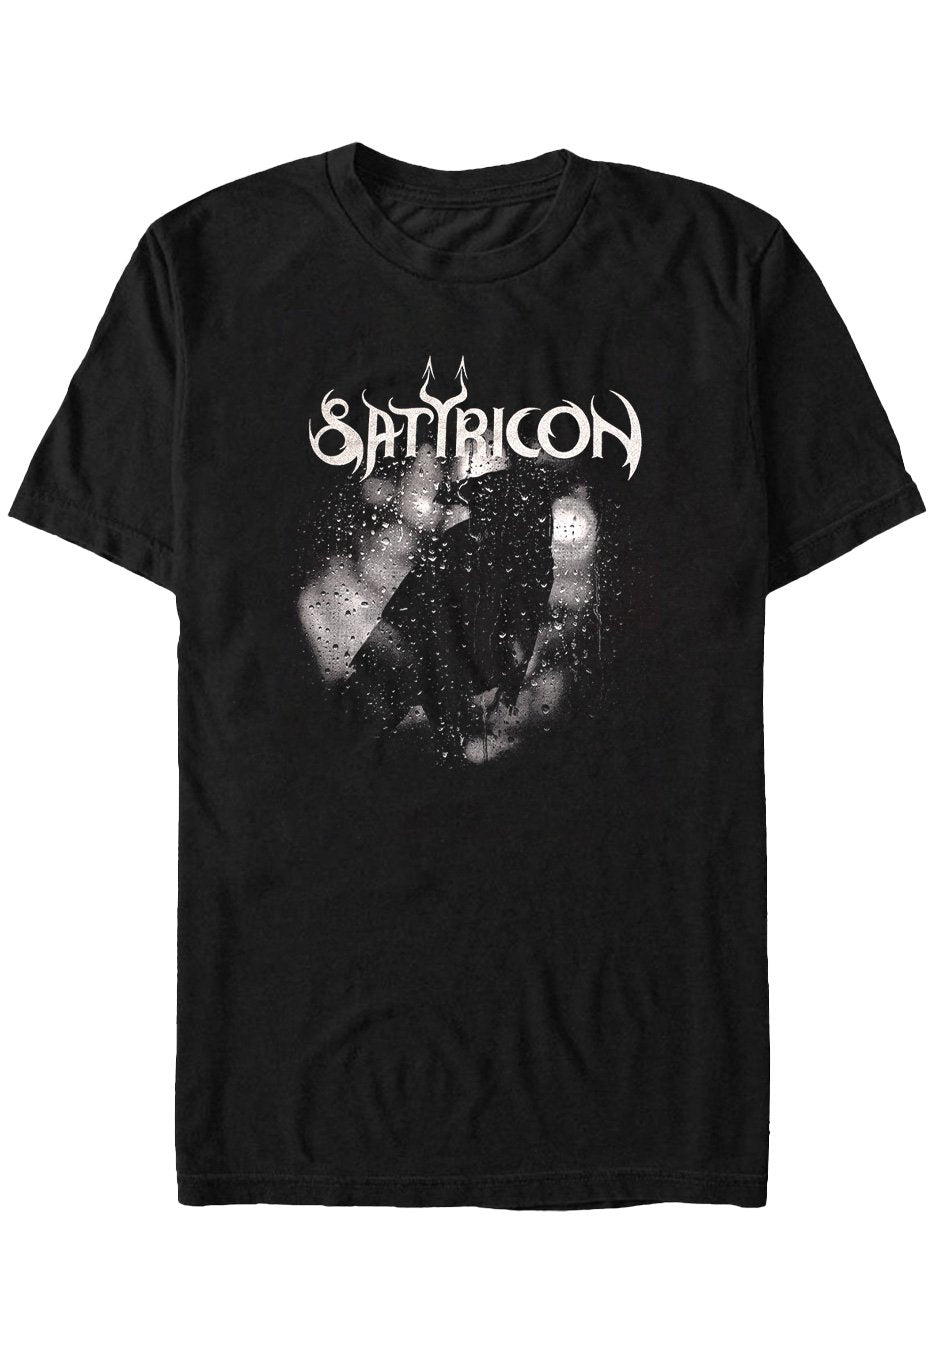 Satyricon - Black Crow - T-Shirt